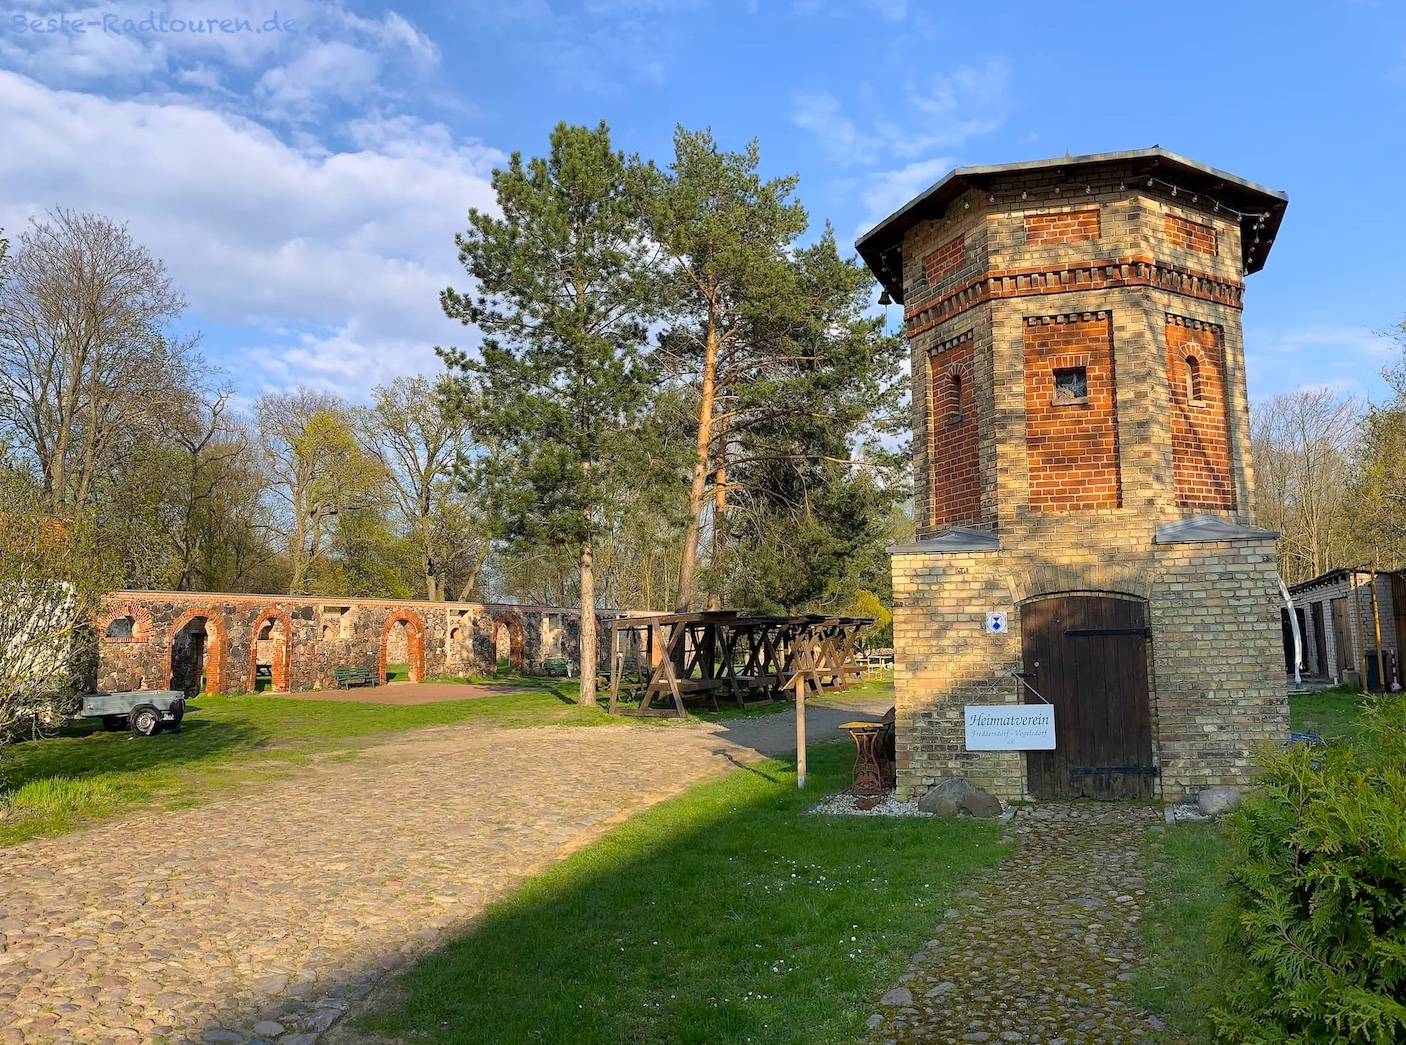 Foto vom Eingang her: Gutshof Fredersdorf, Heimatverein, Ruine Kuhstall